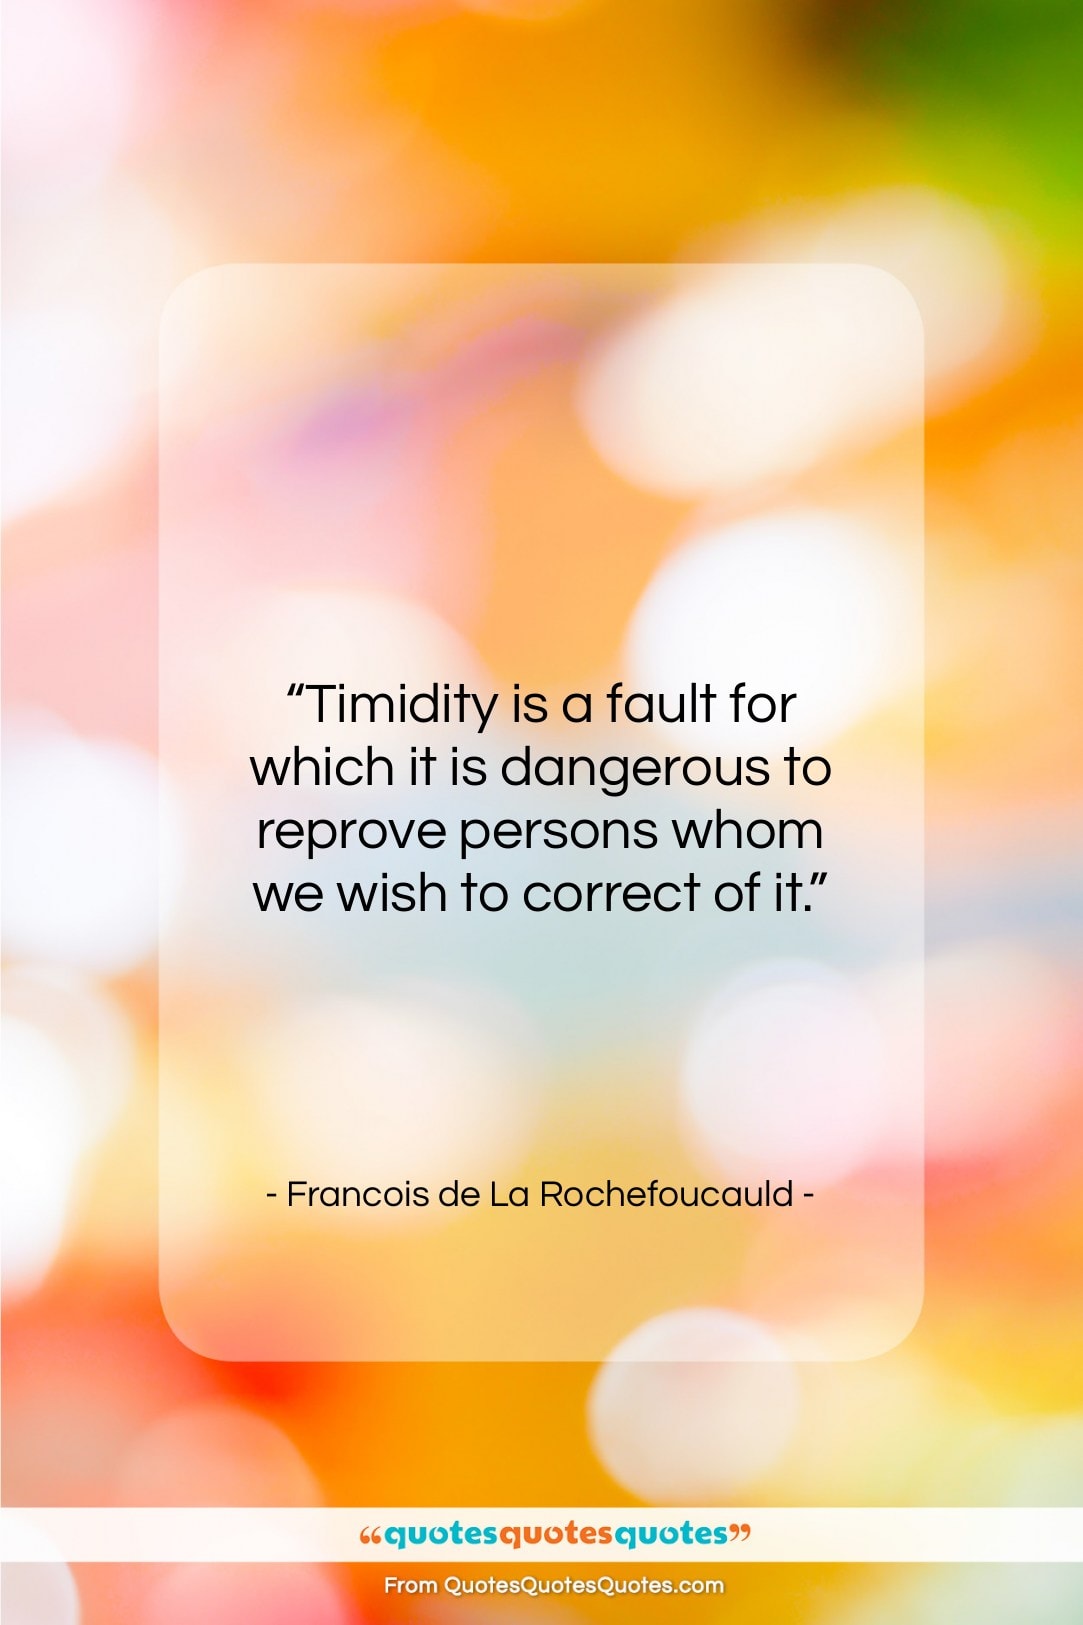 Francois de La Rochefoucauld quote: “Timidity is a fault for which it…”- at QuotesQuotesQuotes.com